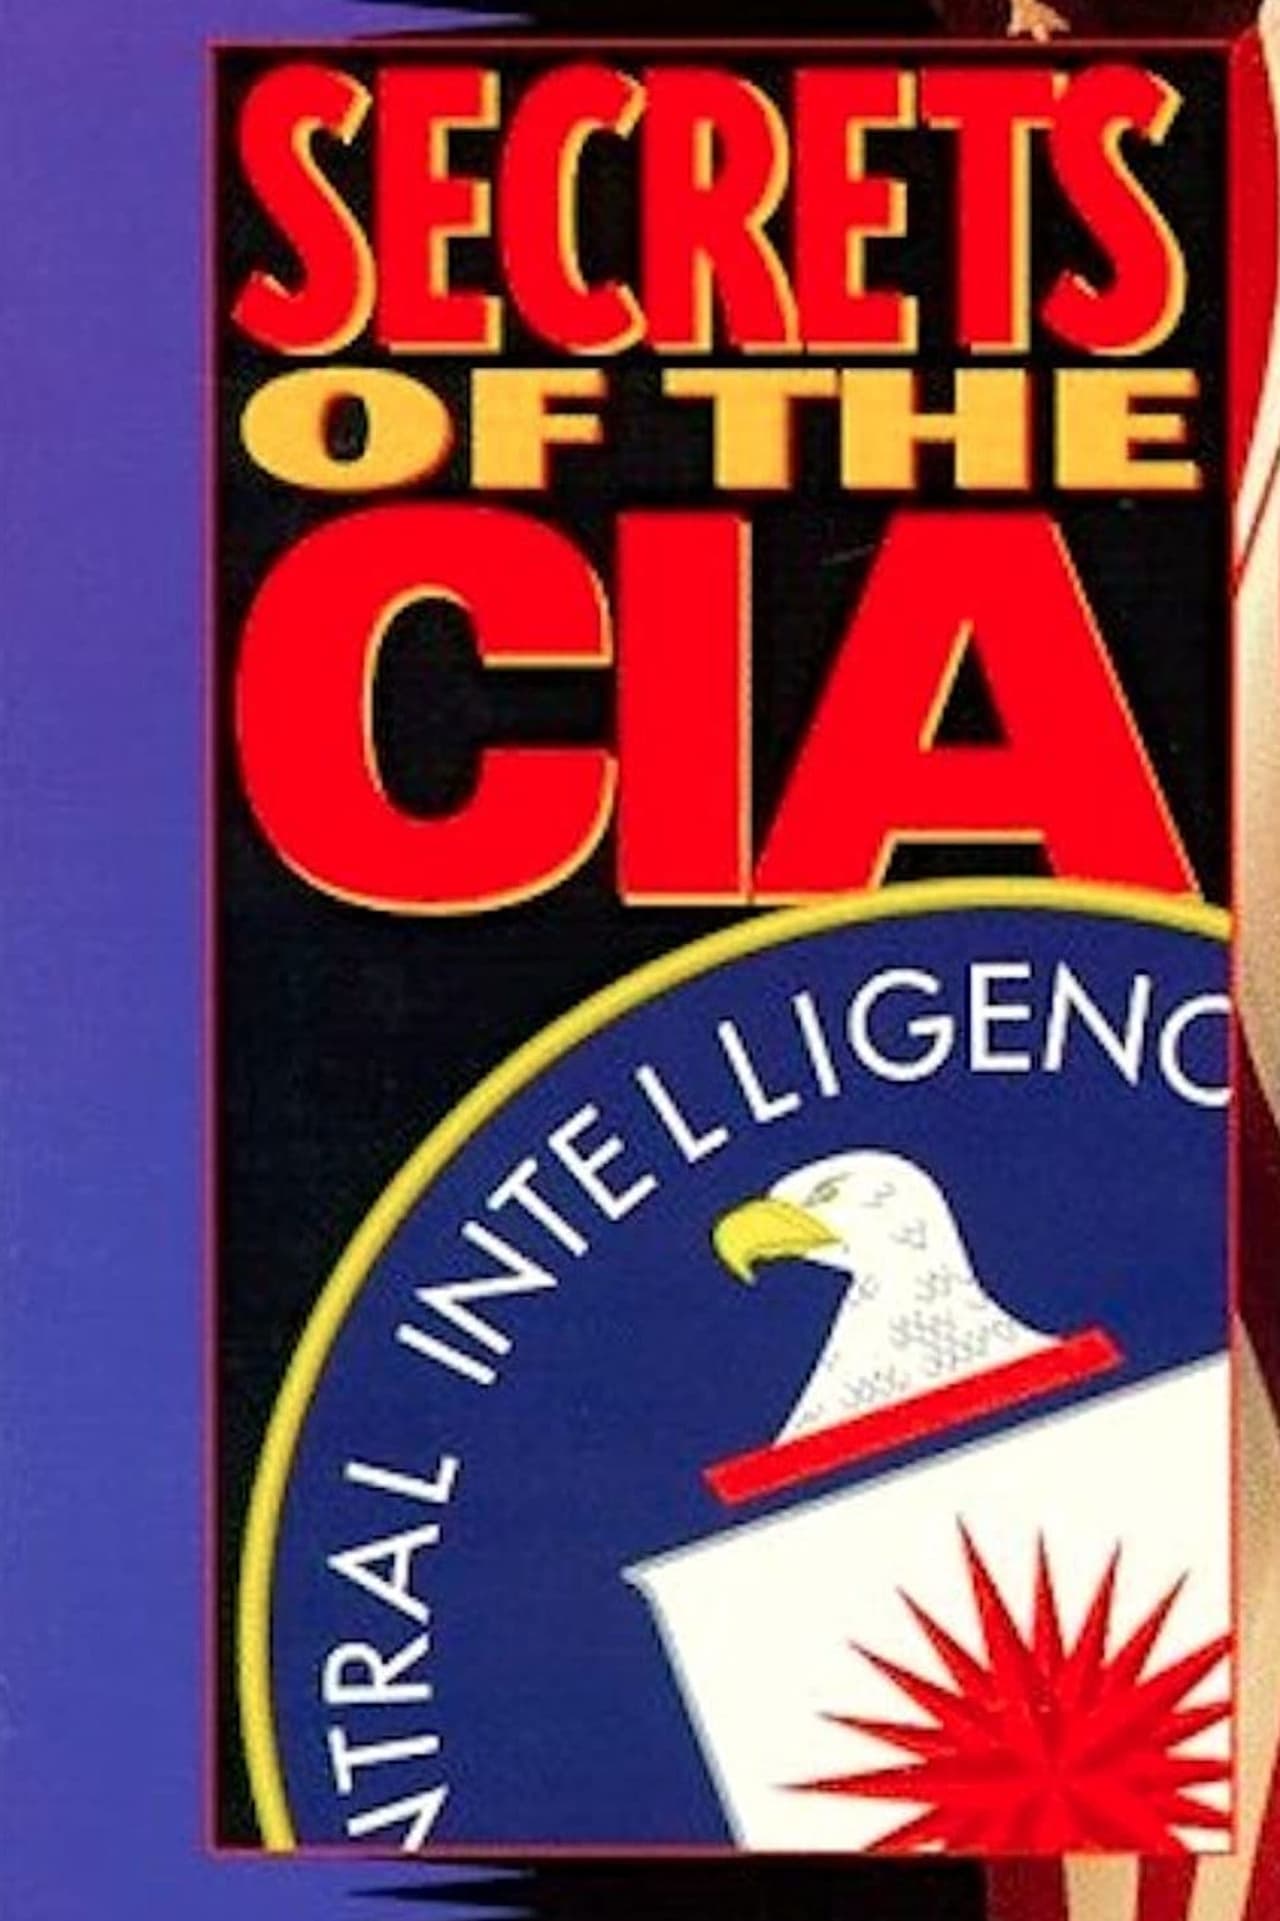 Secrets of the CIA